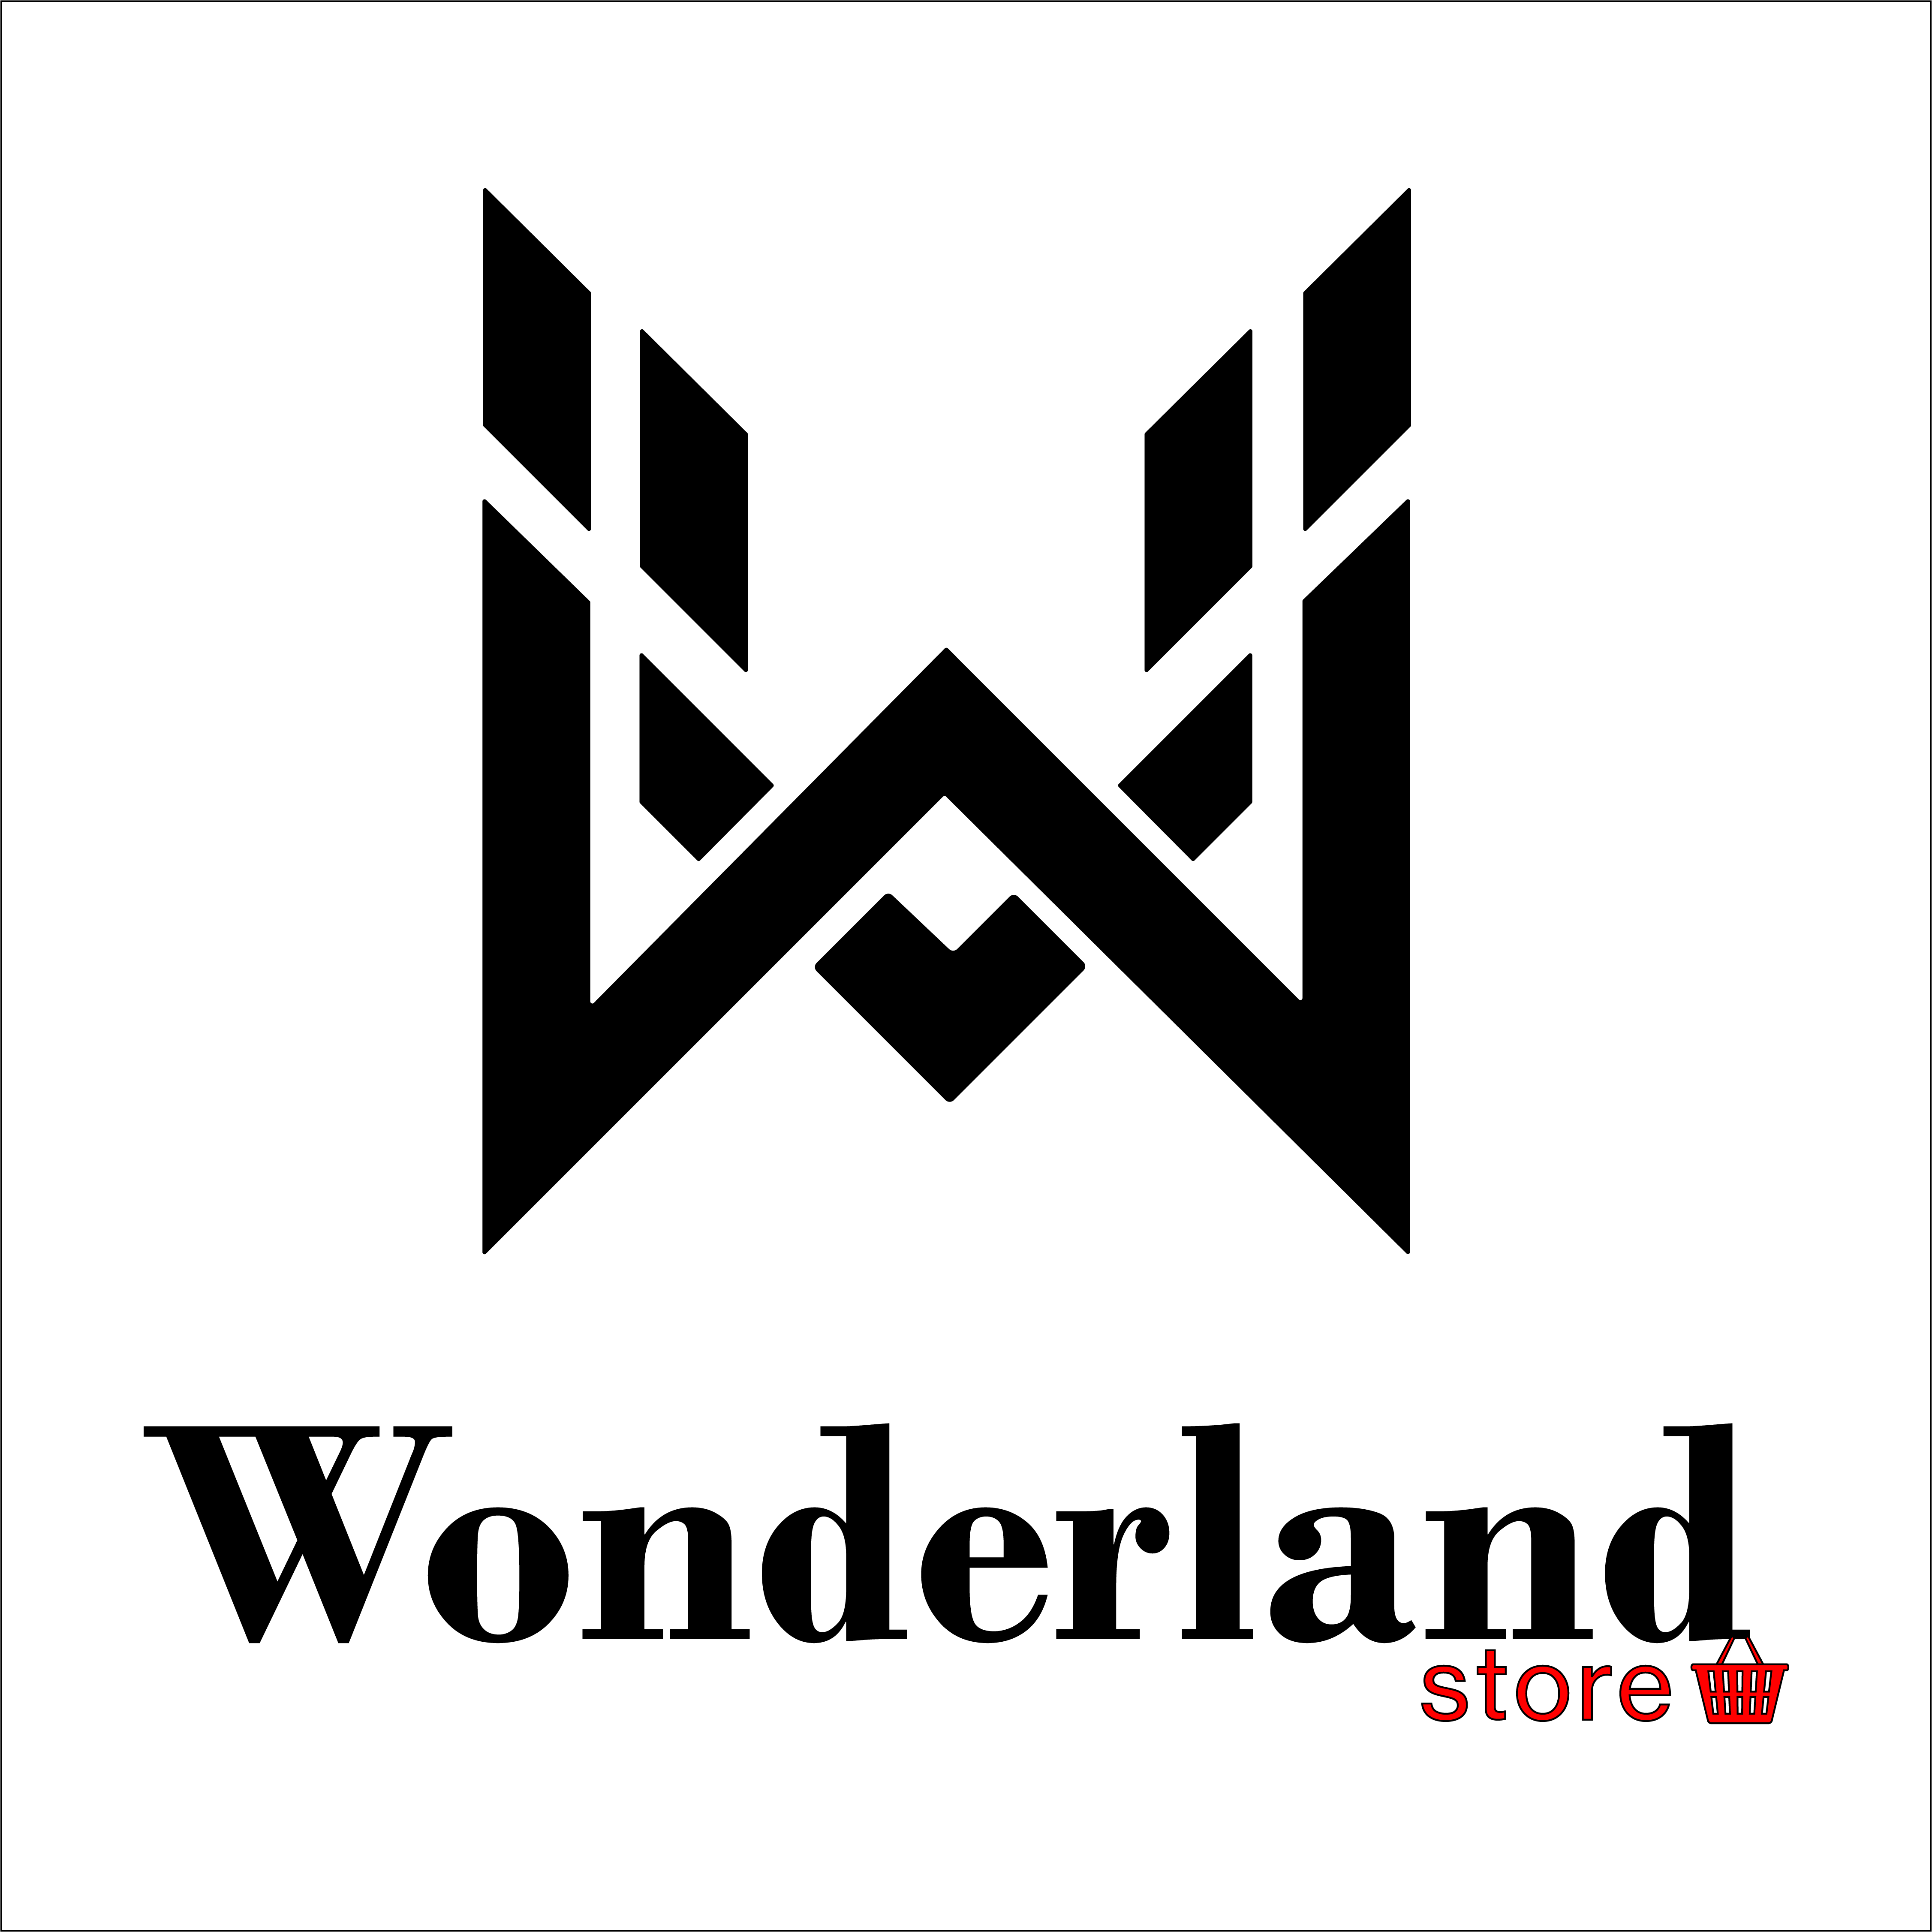 Wonderland store